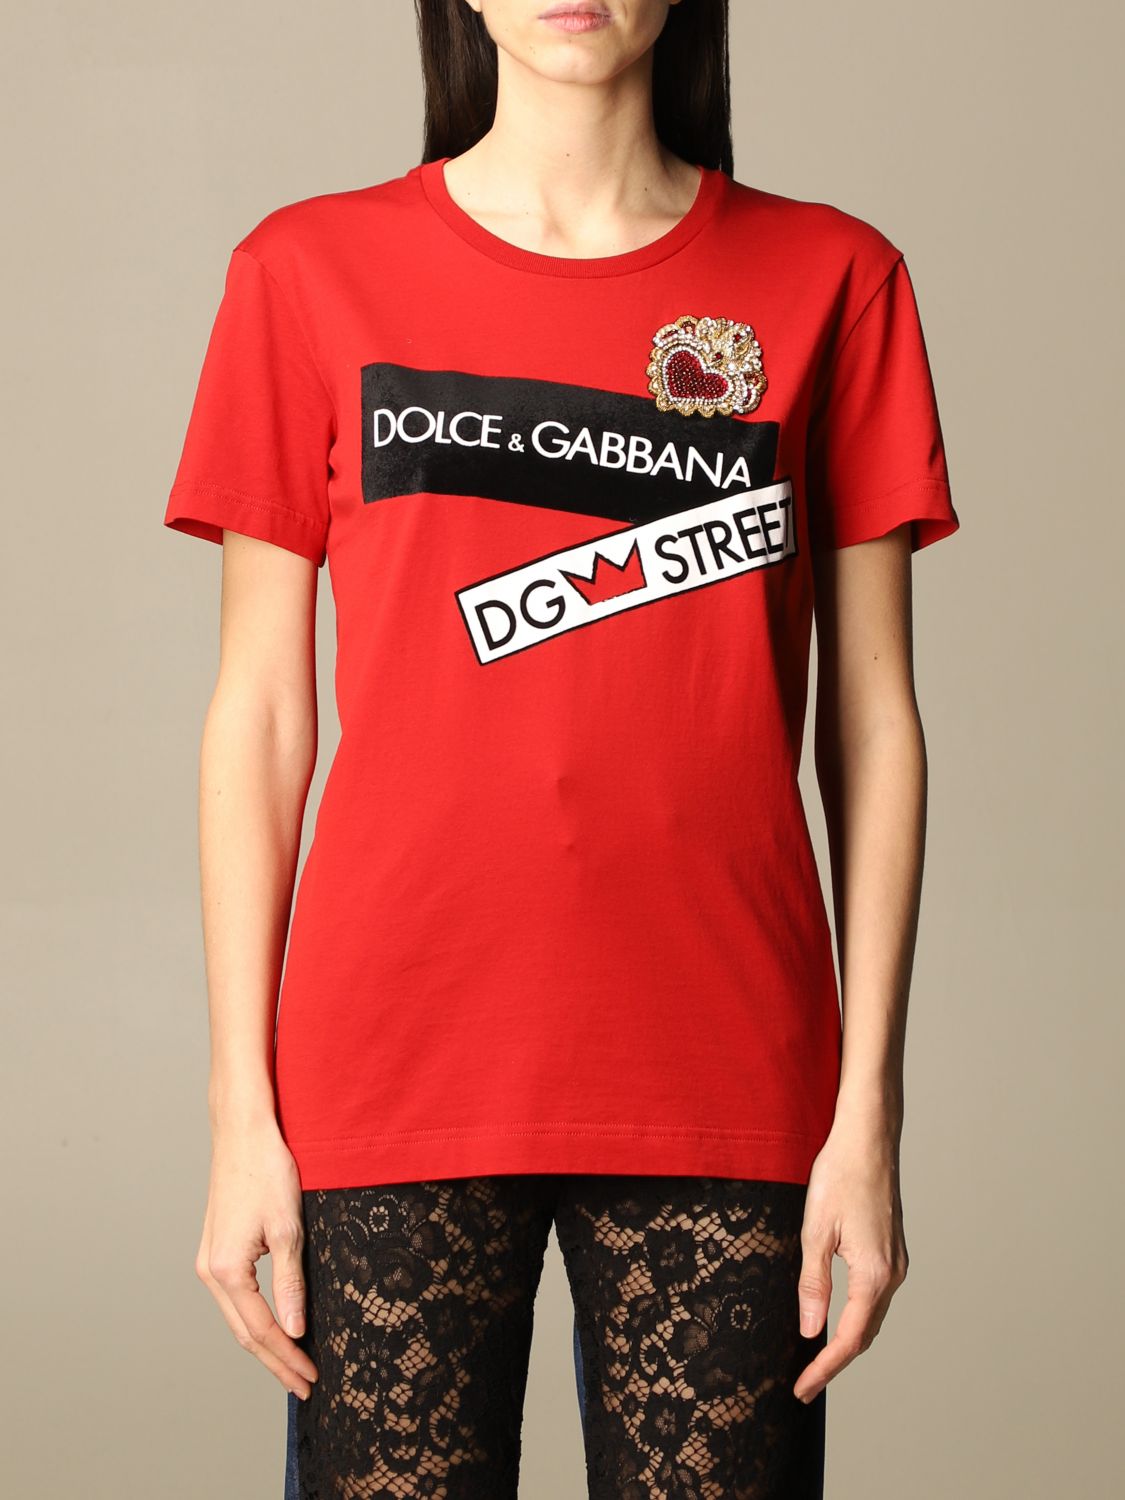 DOLCE & GABBANA: cotton T-shirt with DG Street print | T-Shirt Dolce ...